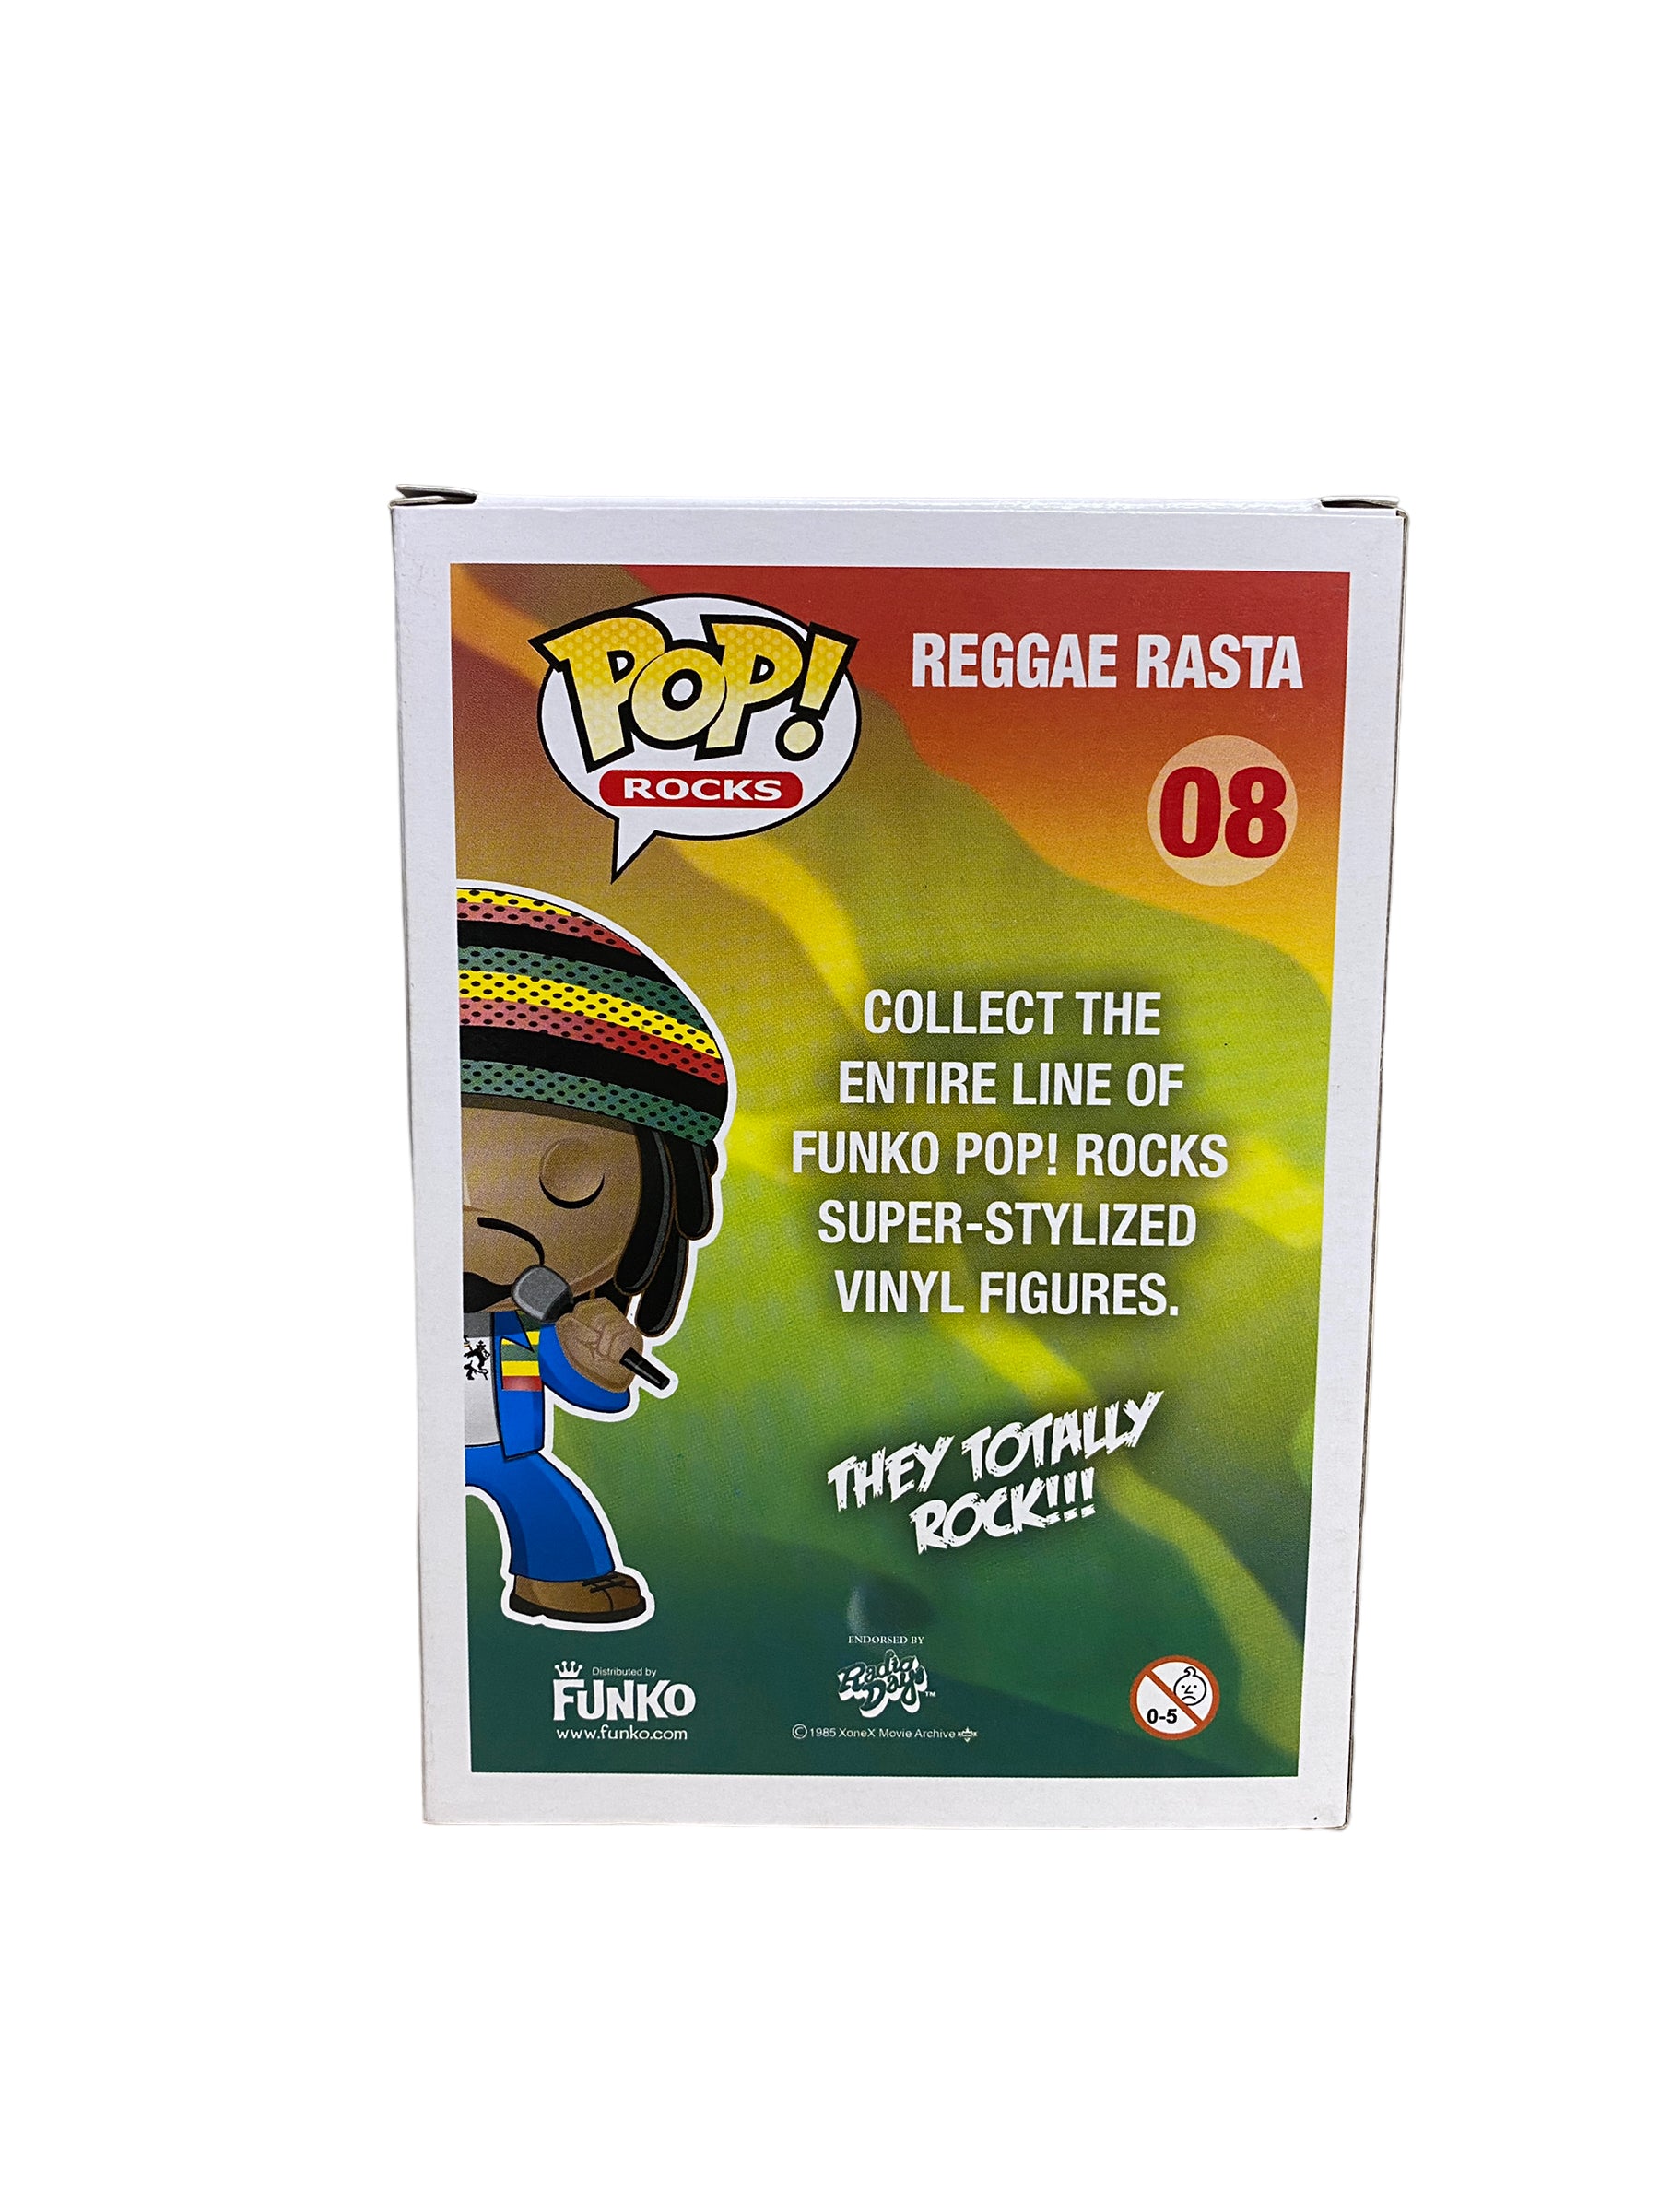 Reggae Rasta #08 (Chase) Funko Pop! - Rocks! - 2010 Pop! - Condition 8/10